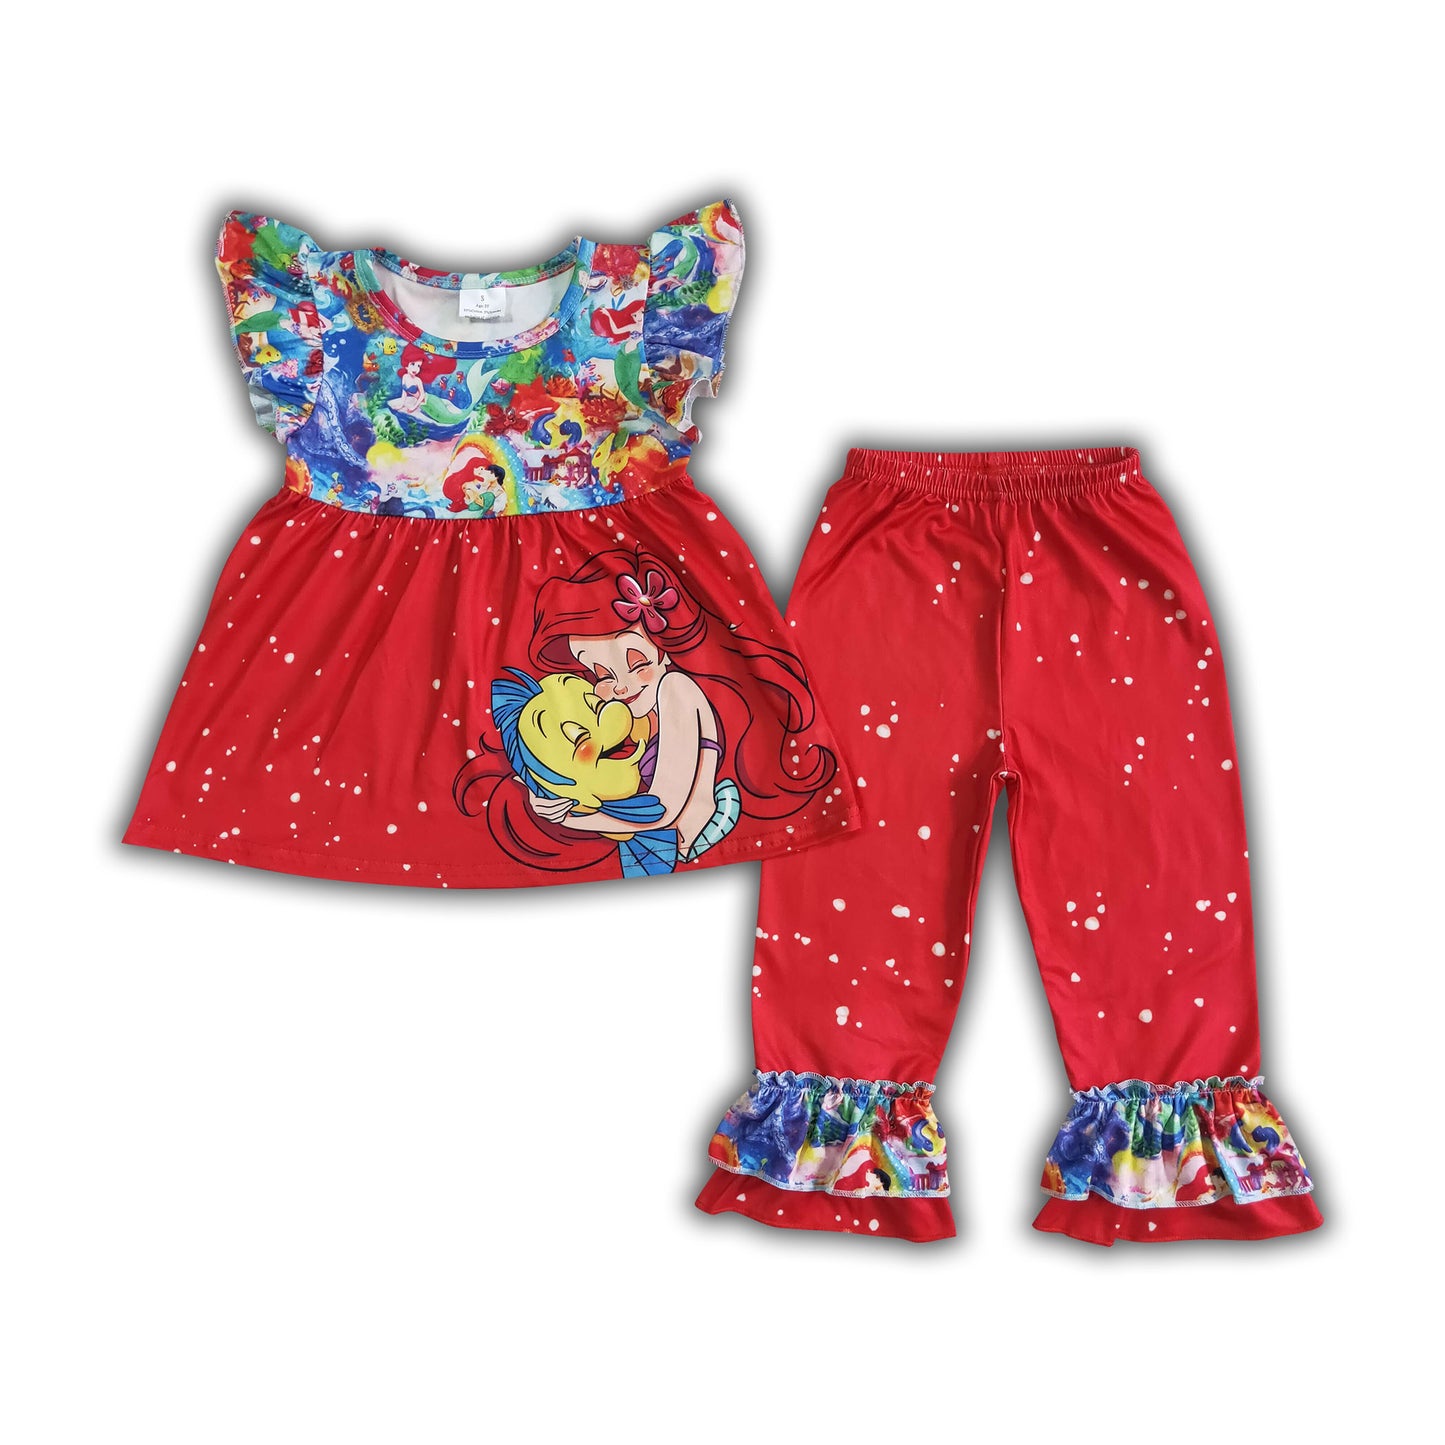 Flutter sleeve cute shirt red ruffle pants princess girls boutique clothing